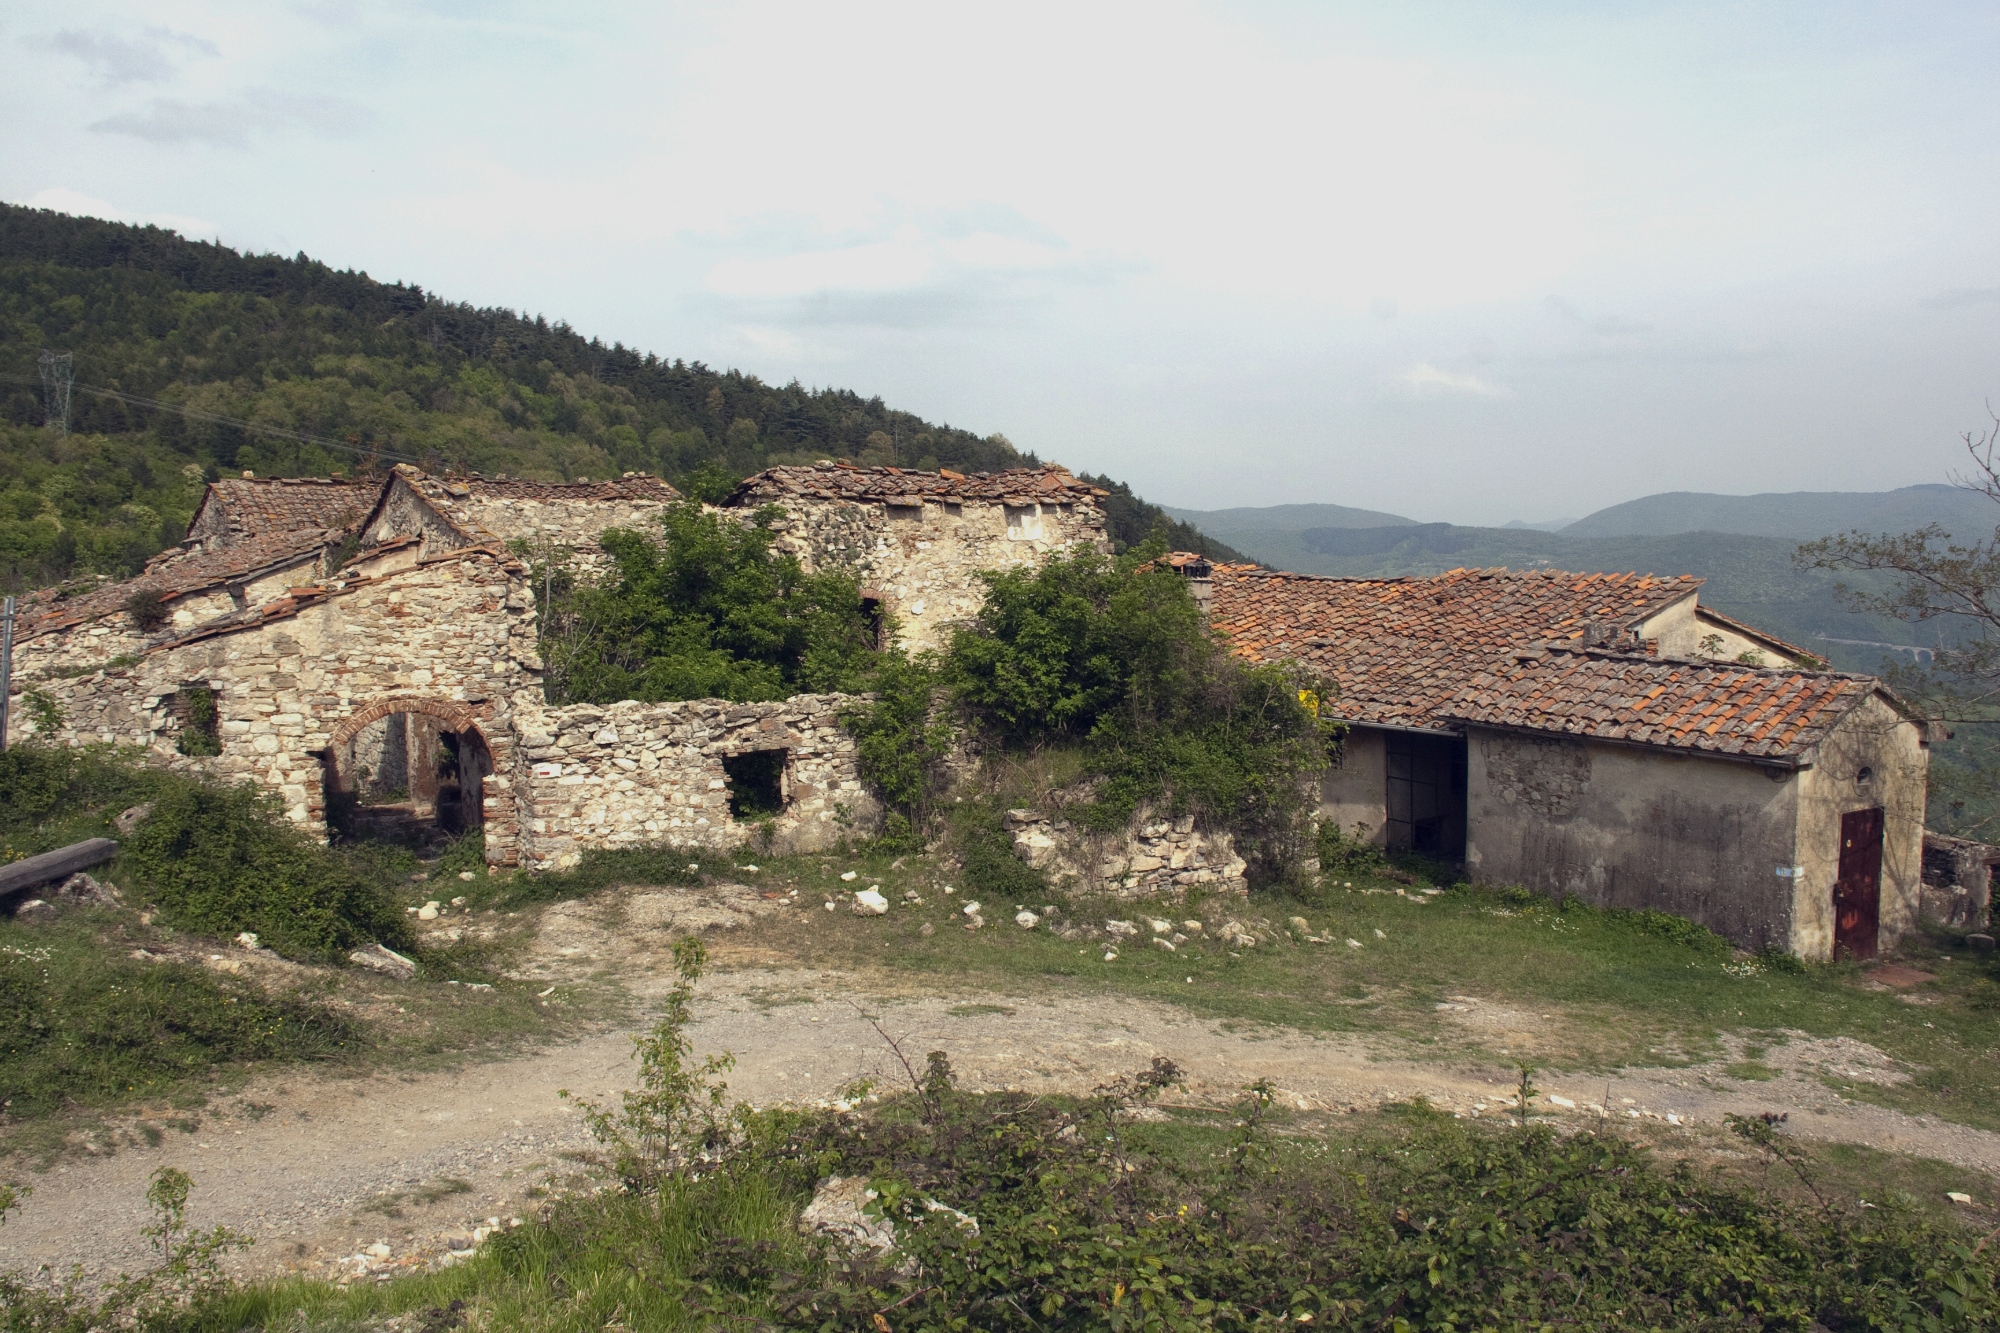 The small hamlet of Valibona, a destination along the Trail of Peace